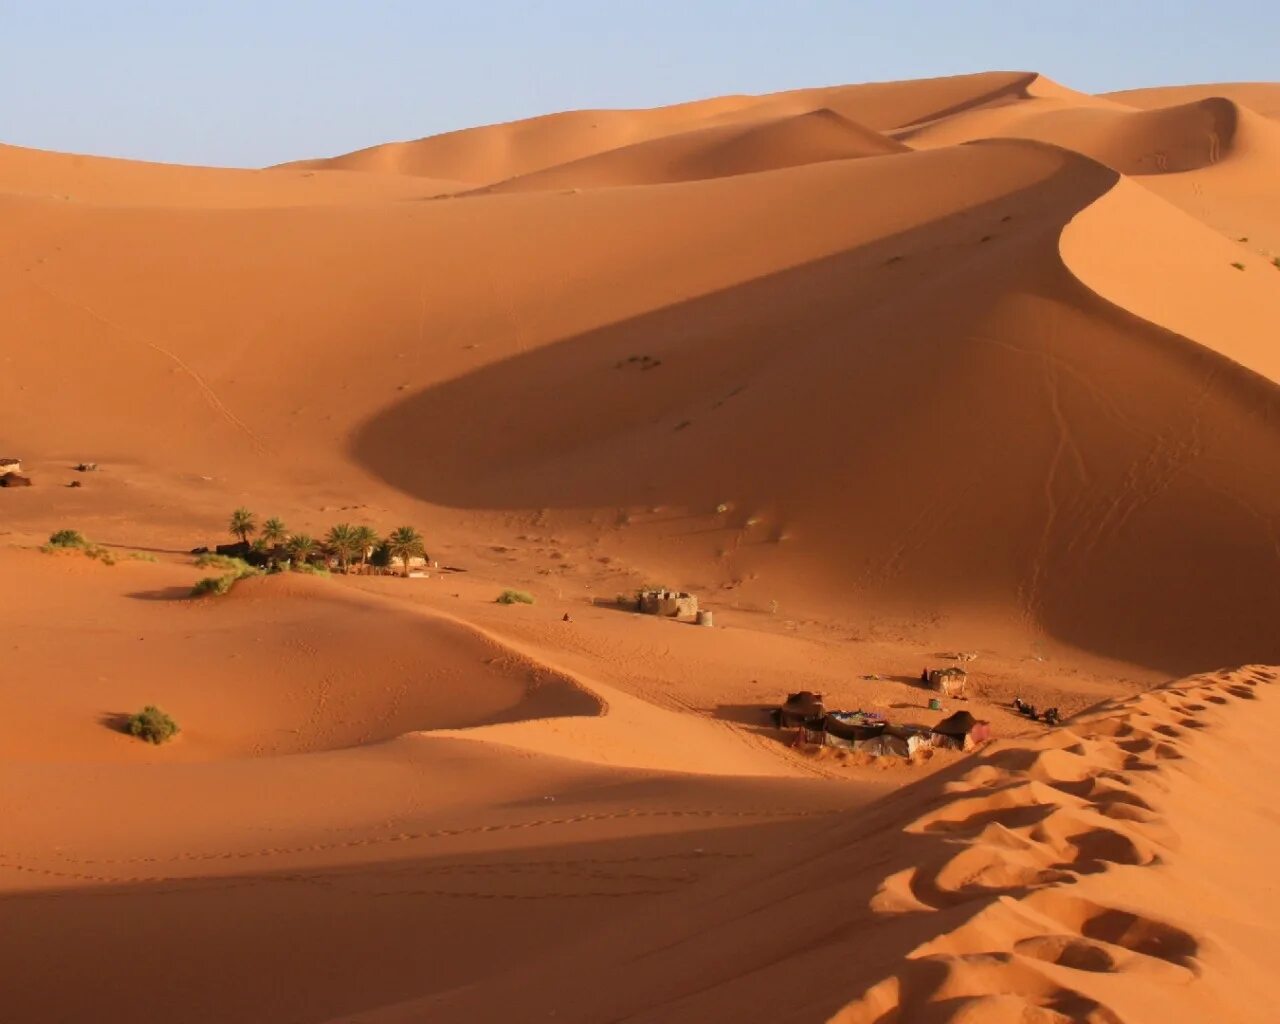 Пустыня Каракум Оазис. Эль ХАМРА пустыня. Пейзаж пустыни Кызылкум. Сахара Оазис. Арабский оазис